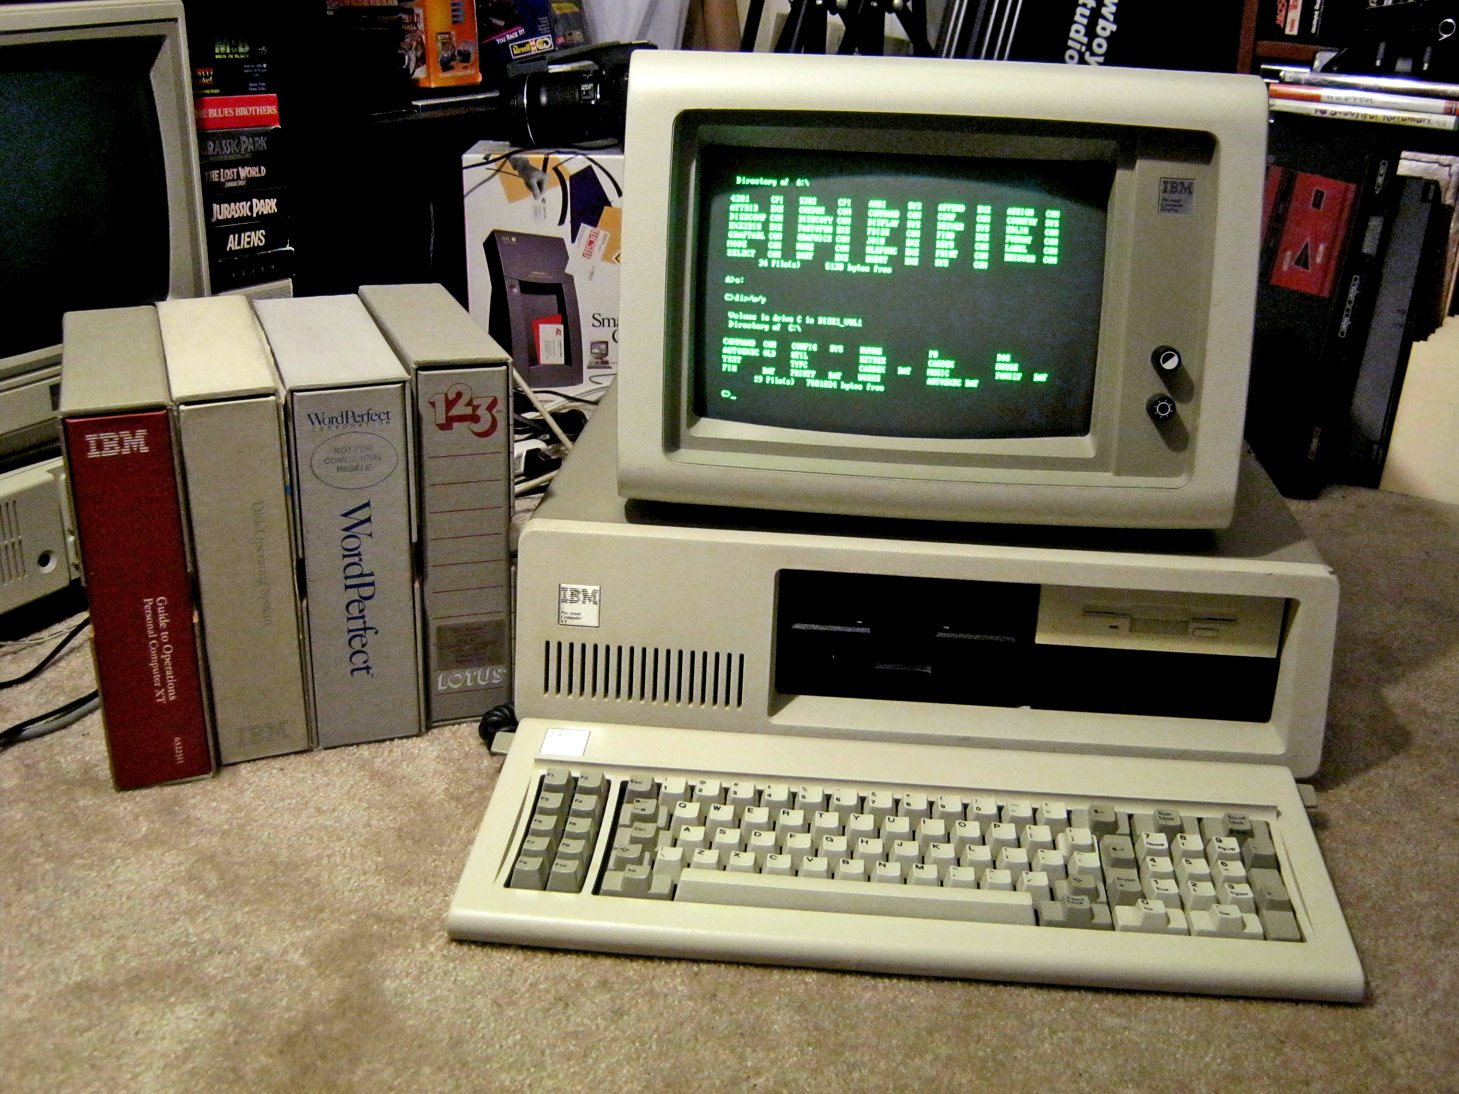 File:IBM PC XT 5160.jpg - Wikimedia Commons